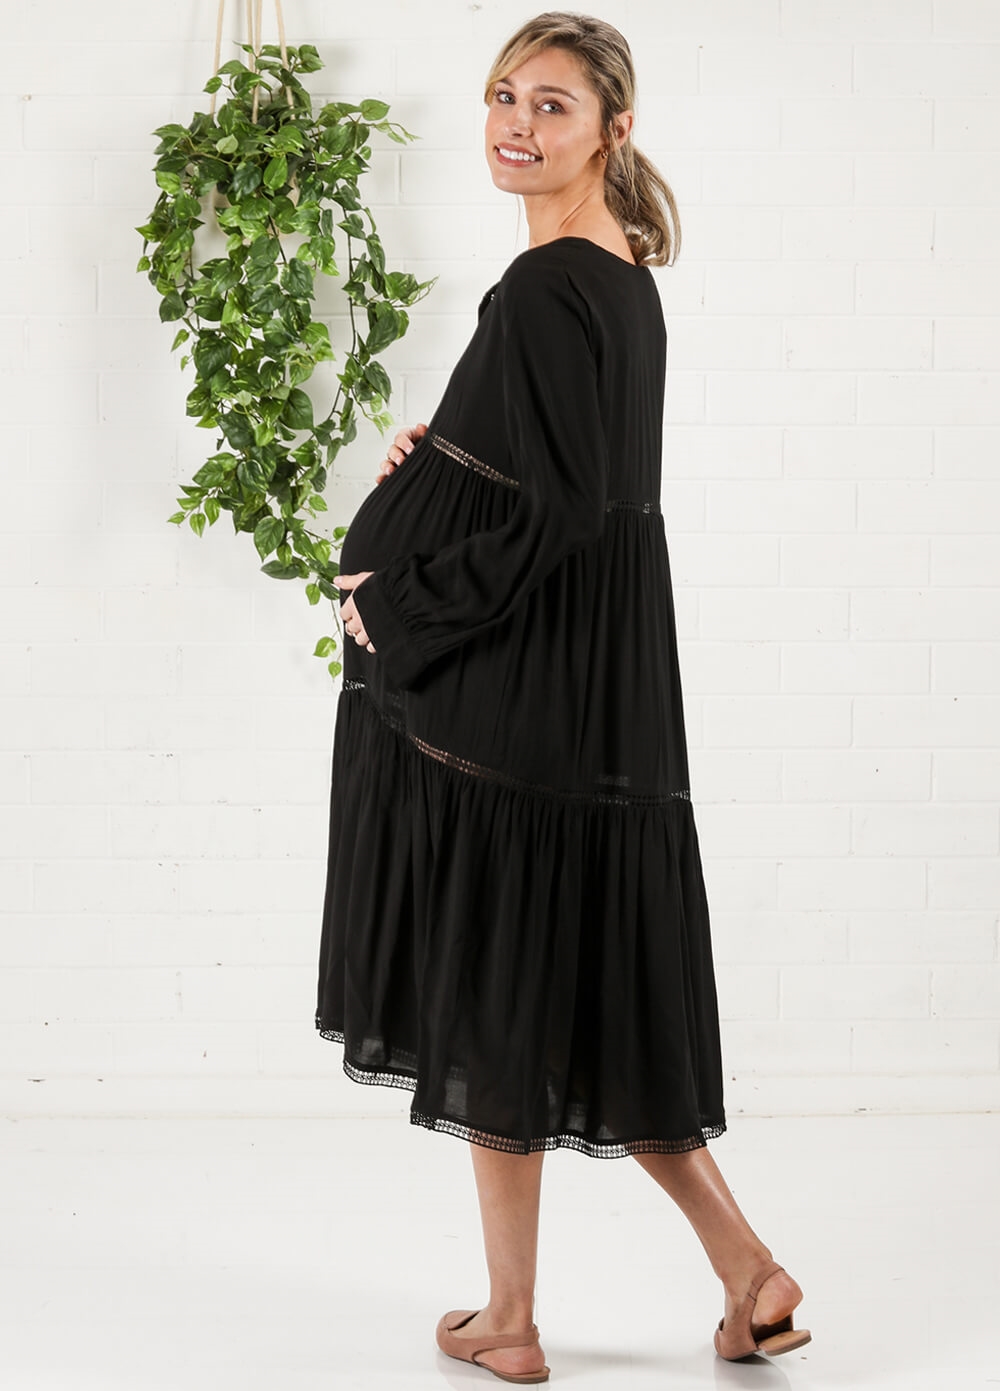 Imanimo - Tina Crochet Trim Maternity Boho Dress | Queen Bee